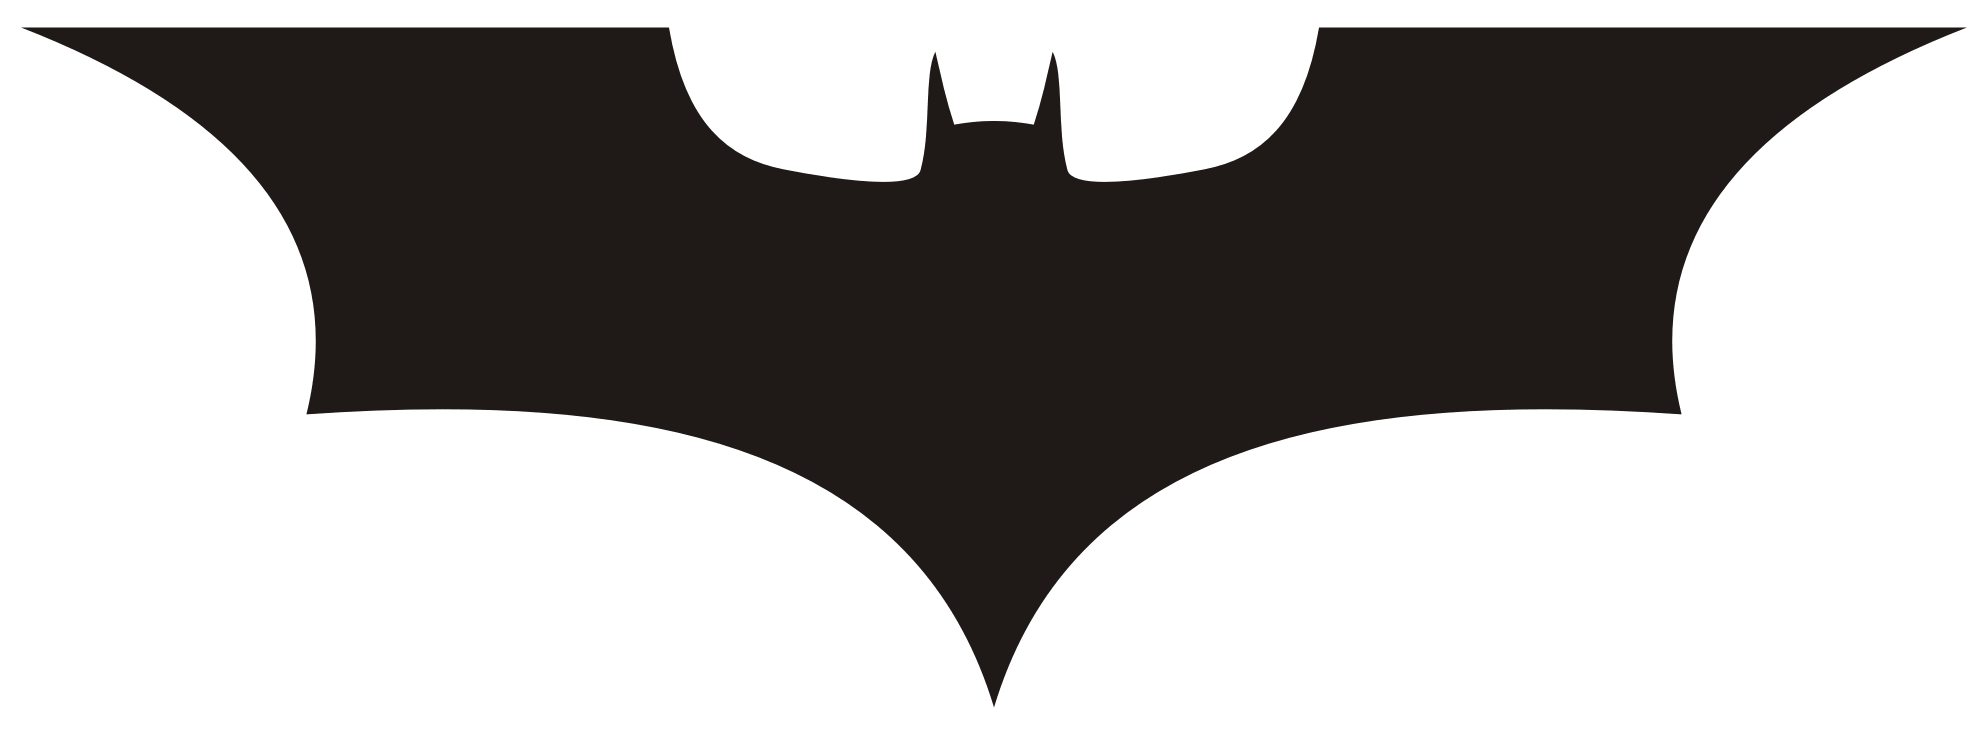 batman emblem printable free free printable batman logo download free clip art batman printable emblem 